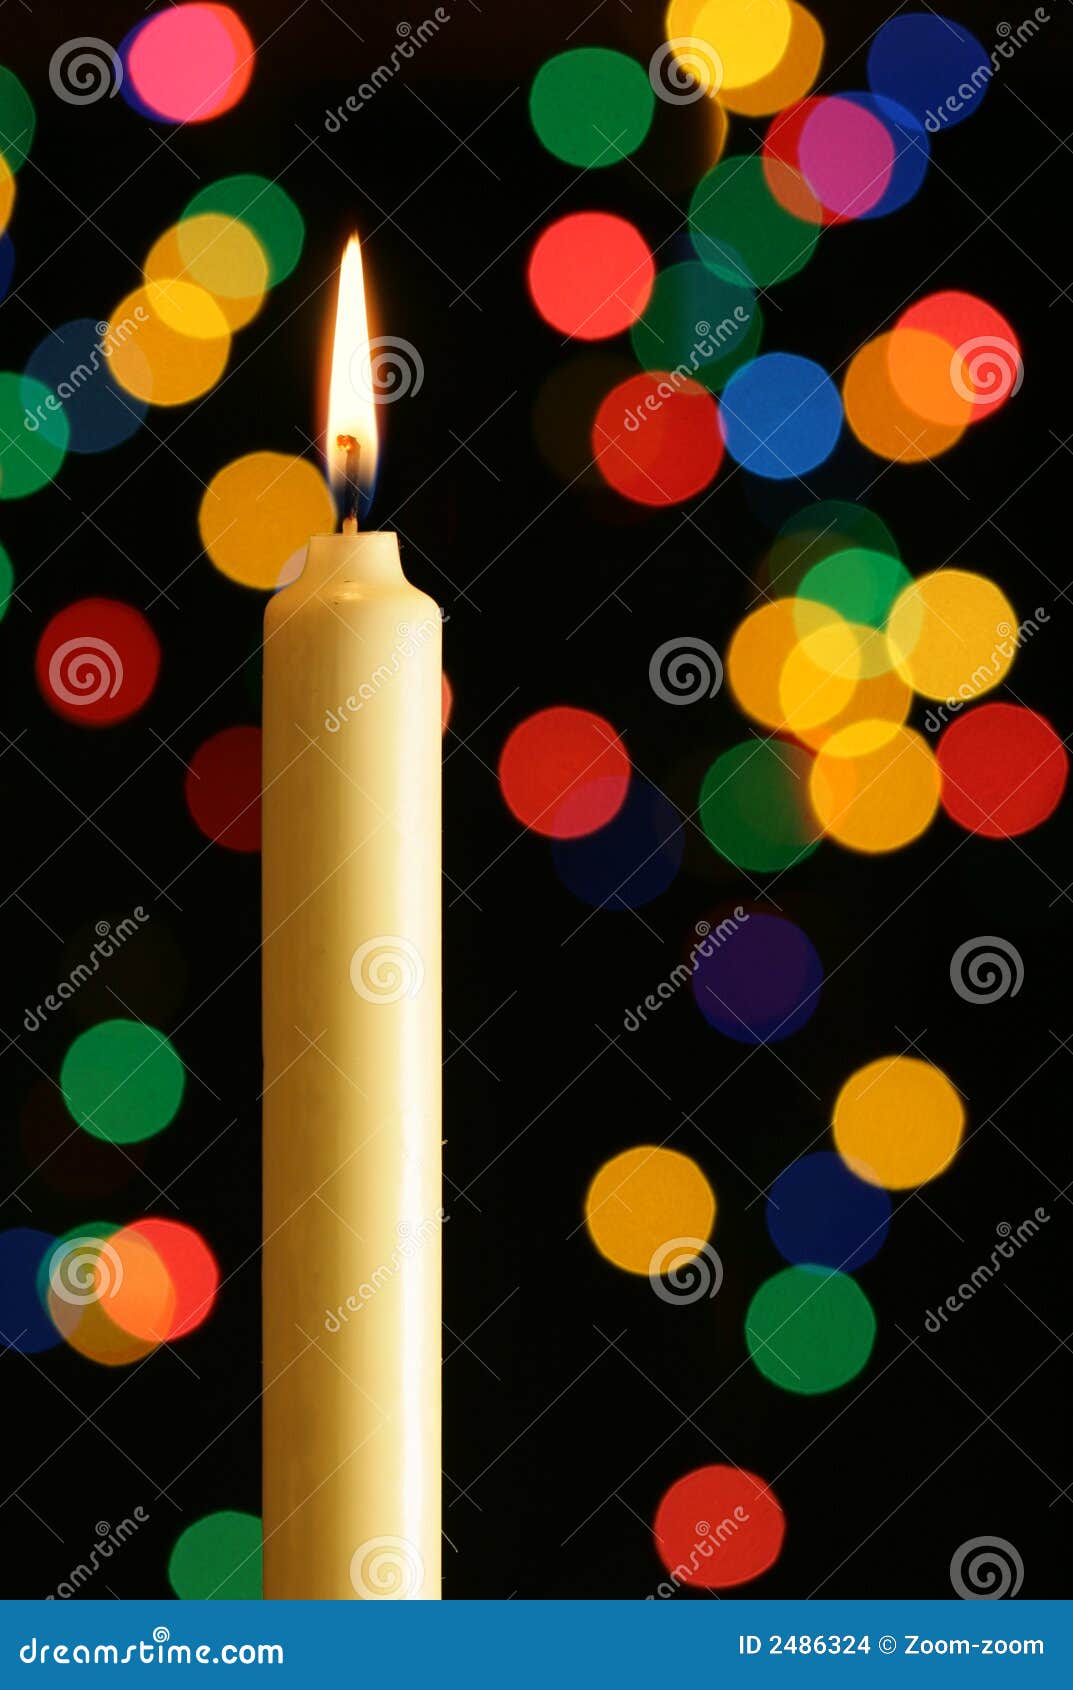 Candle And Illumination Lights Stock Photo - Image of decoration ...